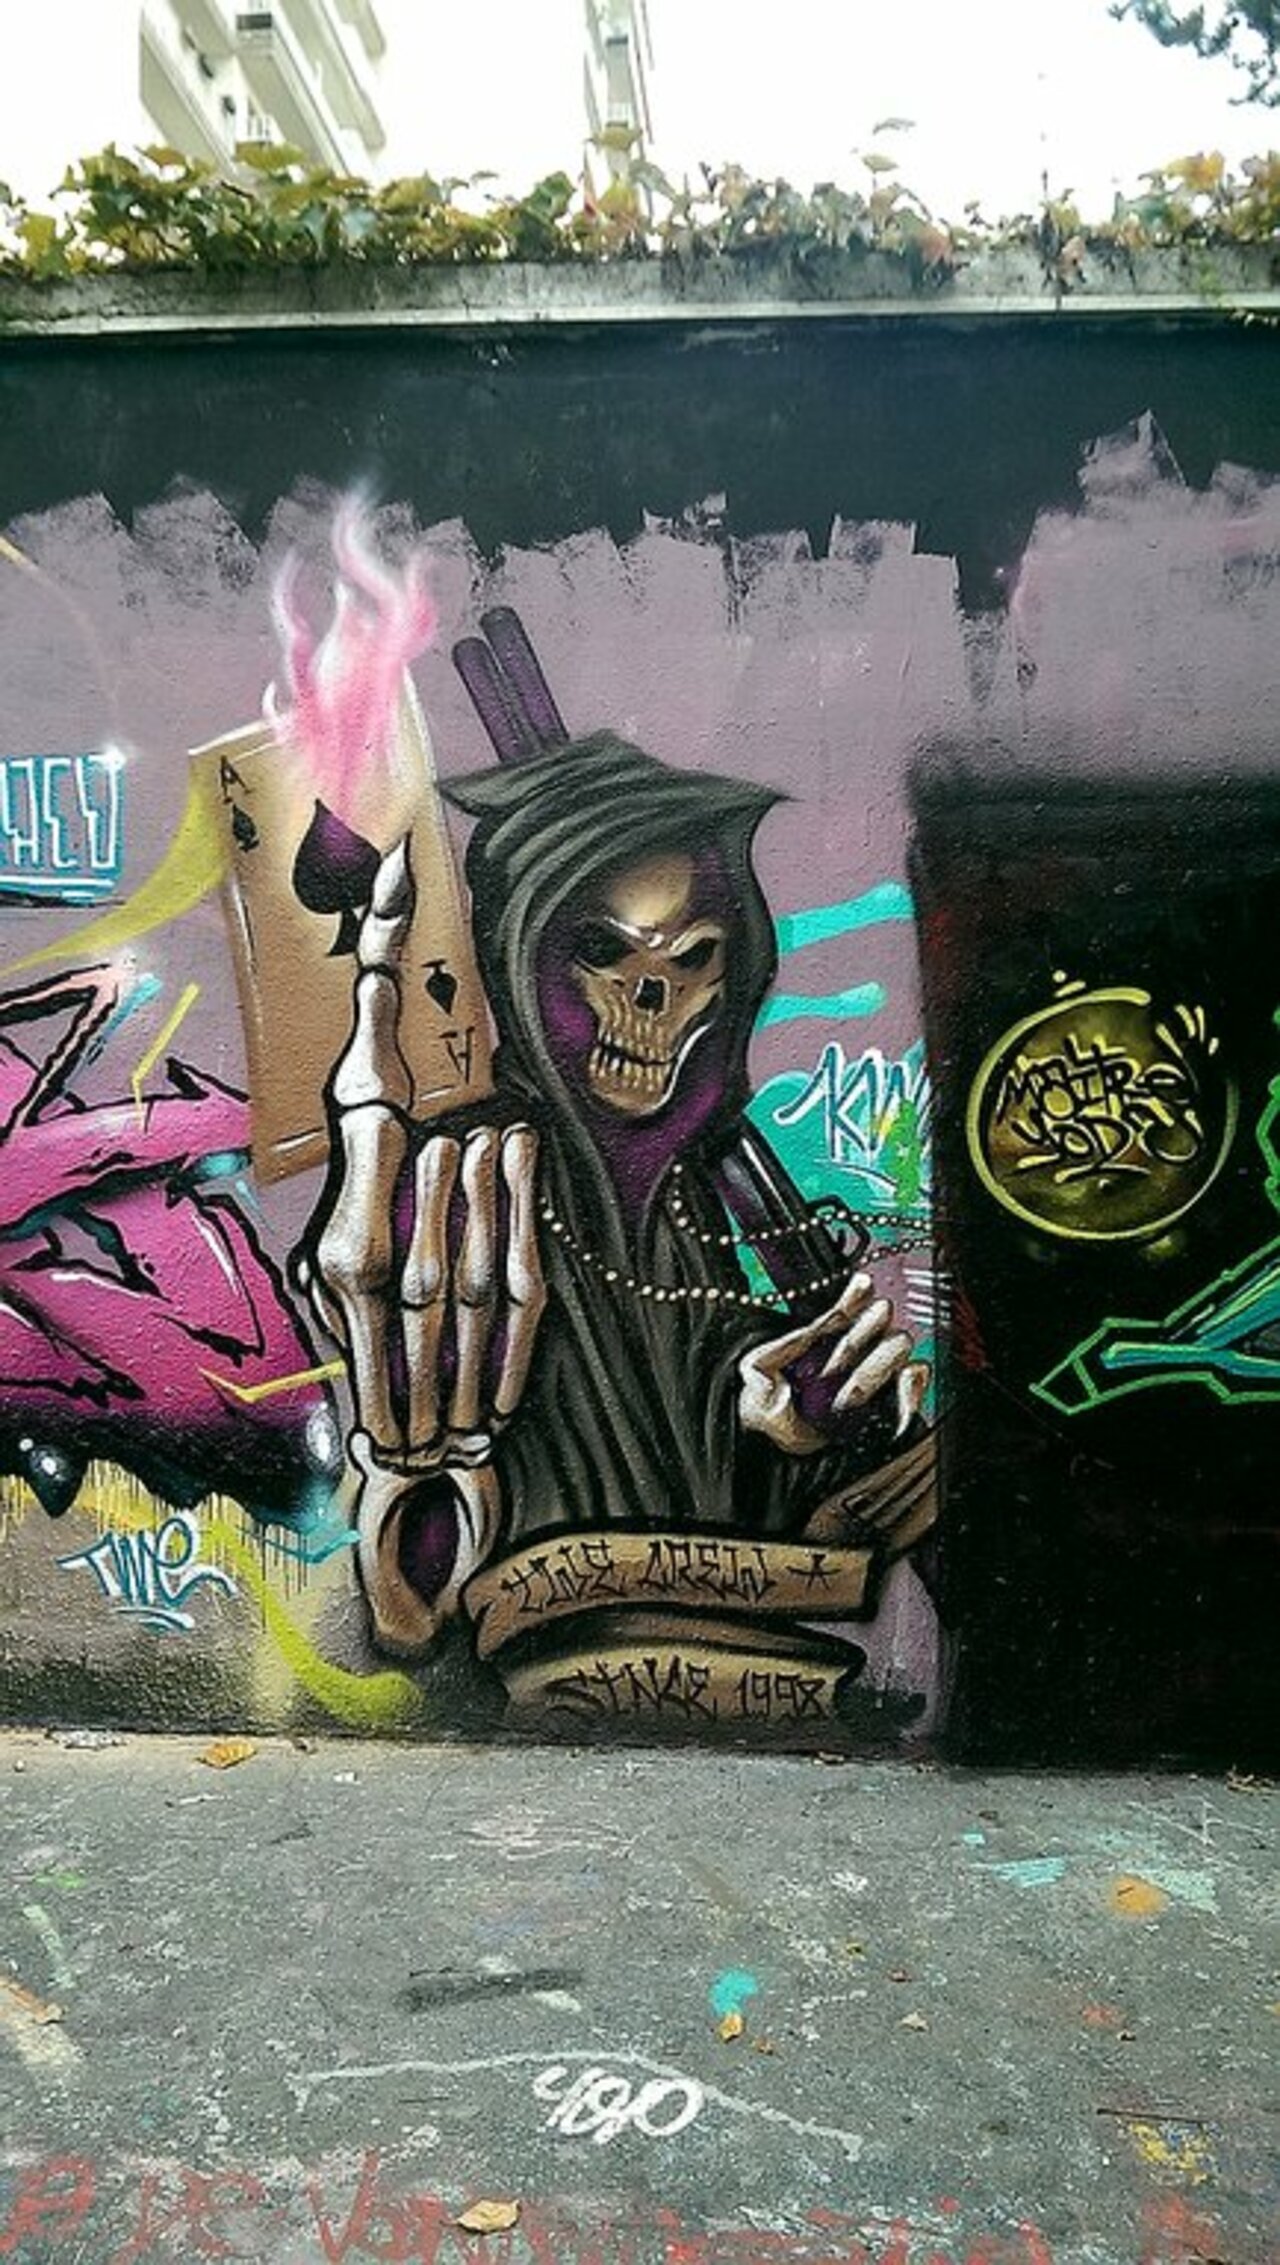 Street Art by anonymous in #Paris http://www.urbacolors.com #art #mural #graffiti #streetart https://t.co/HDqFWwUKaP